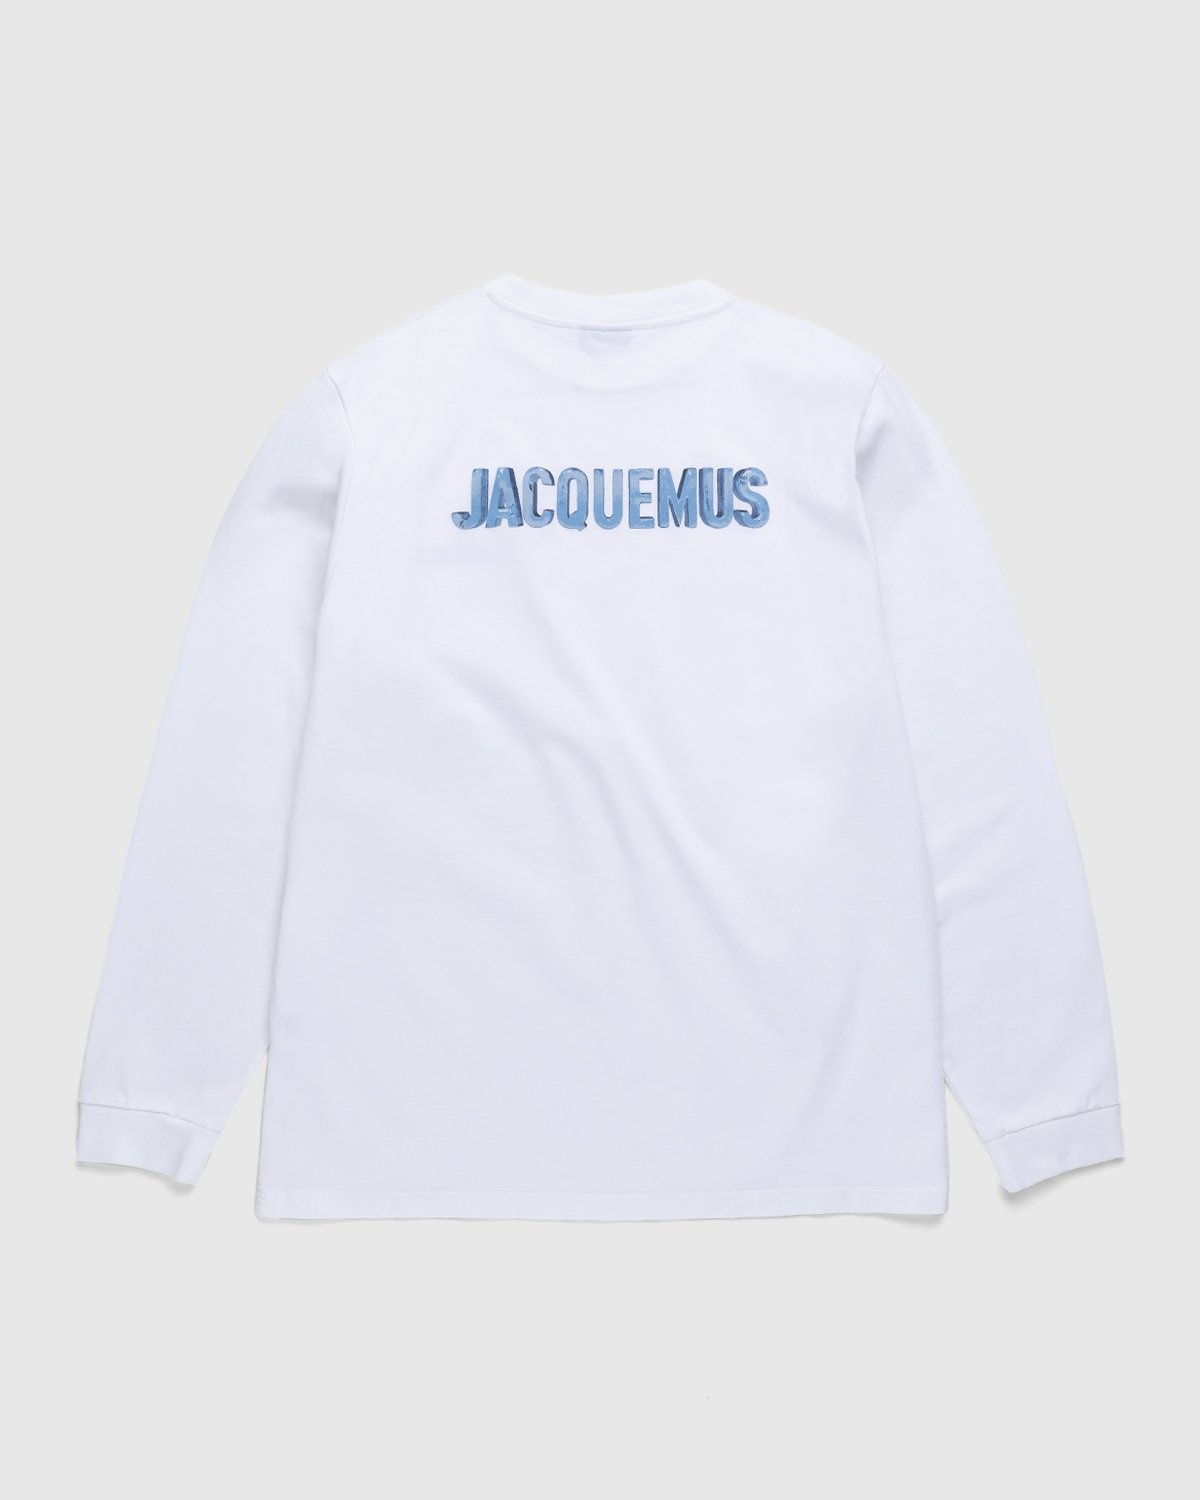 JACQUEMUS – Le T-Shirt Gelo Print Ice Jacquemus White - Longsleeves - White - Image 2